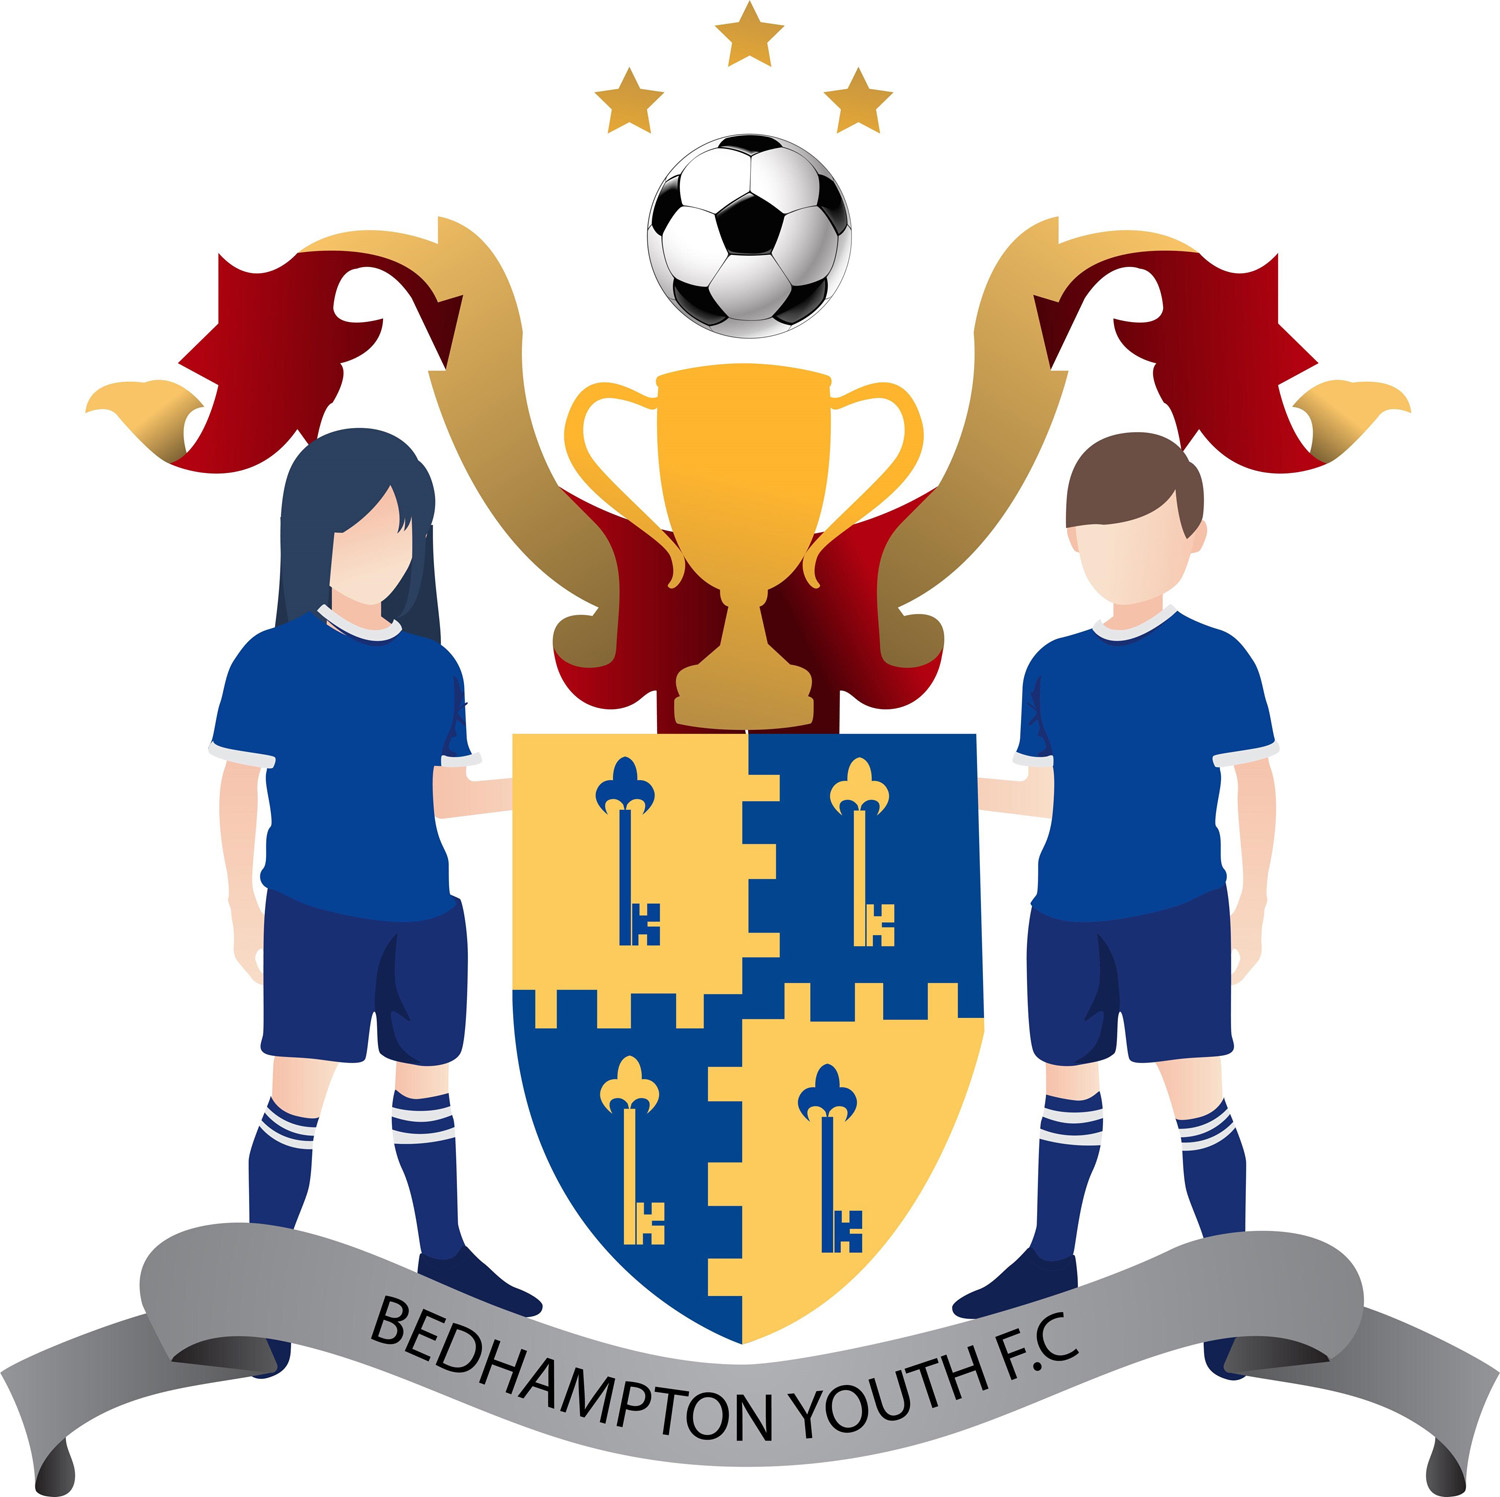 Bedhampton Youth FC